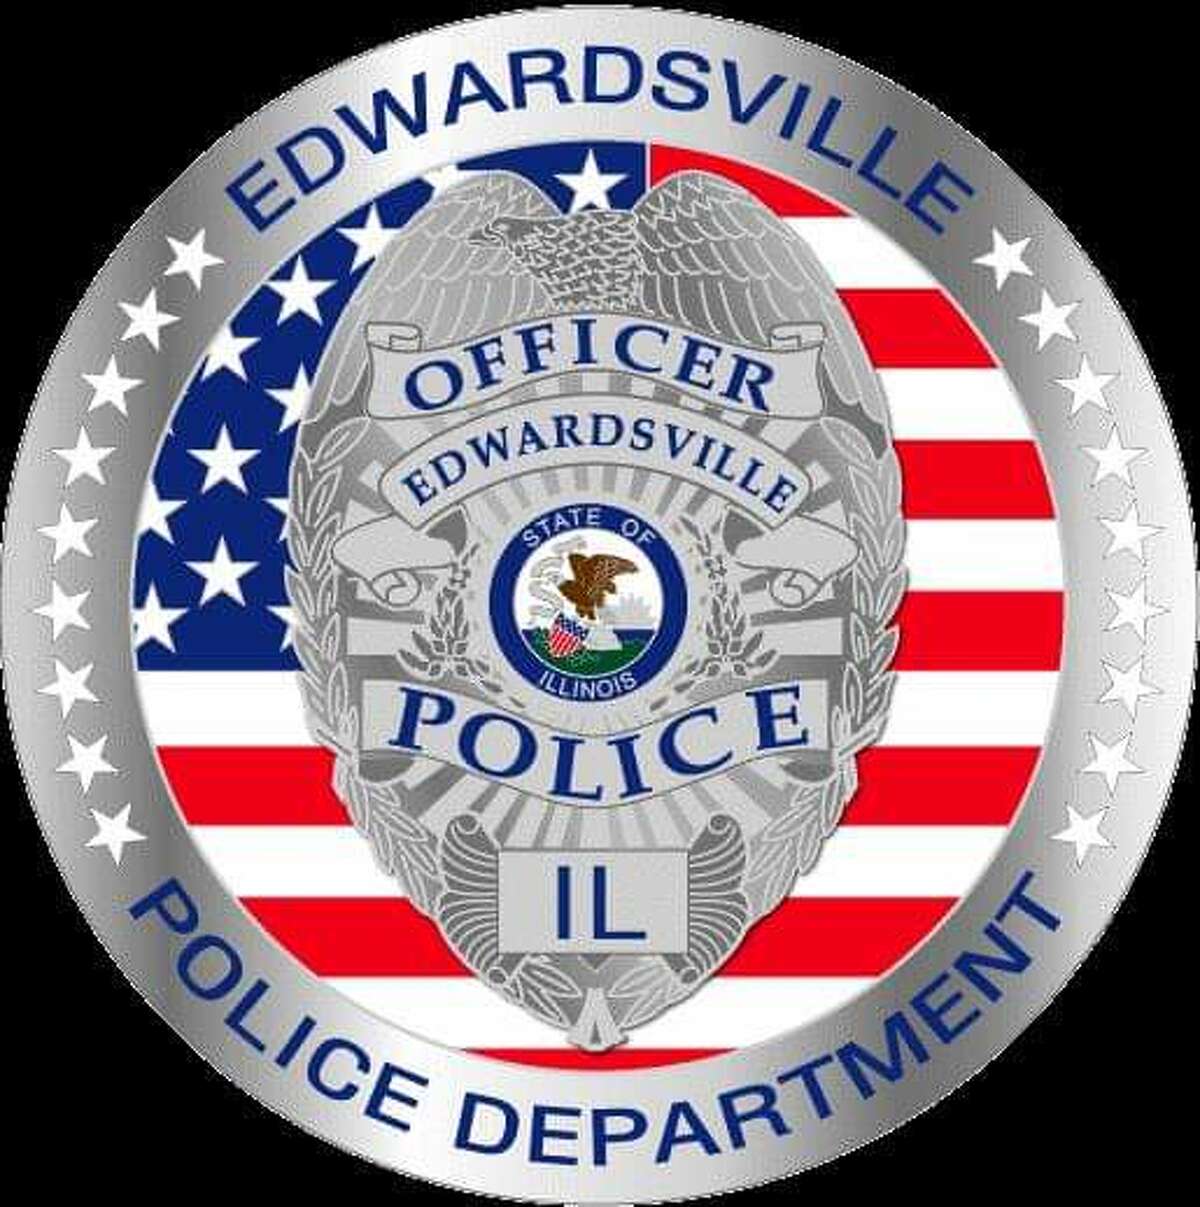 Edwardsville Police Department